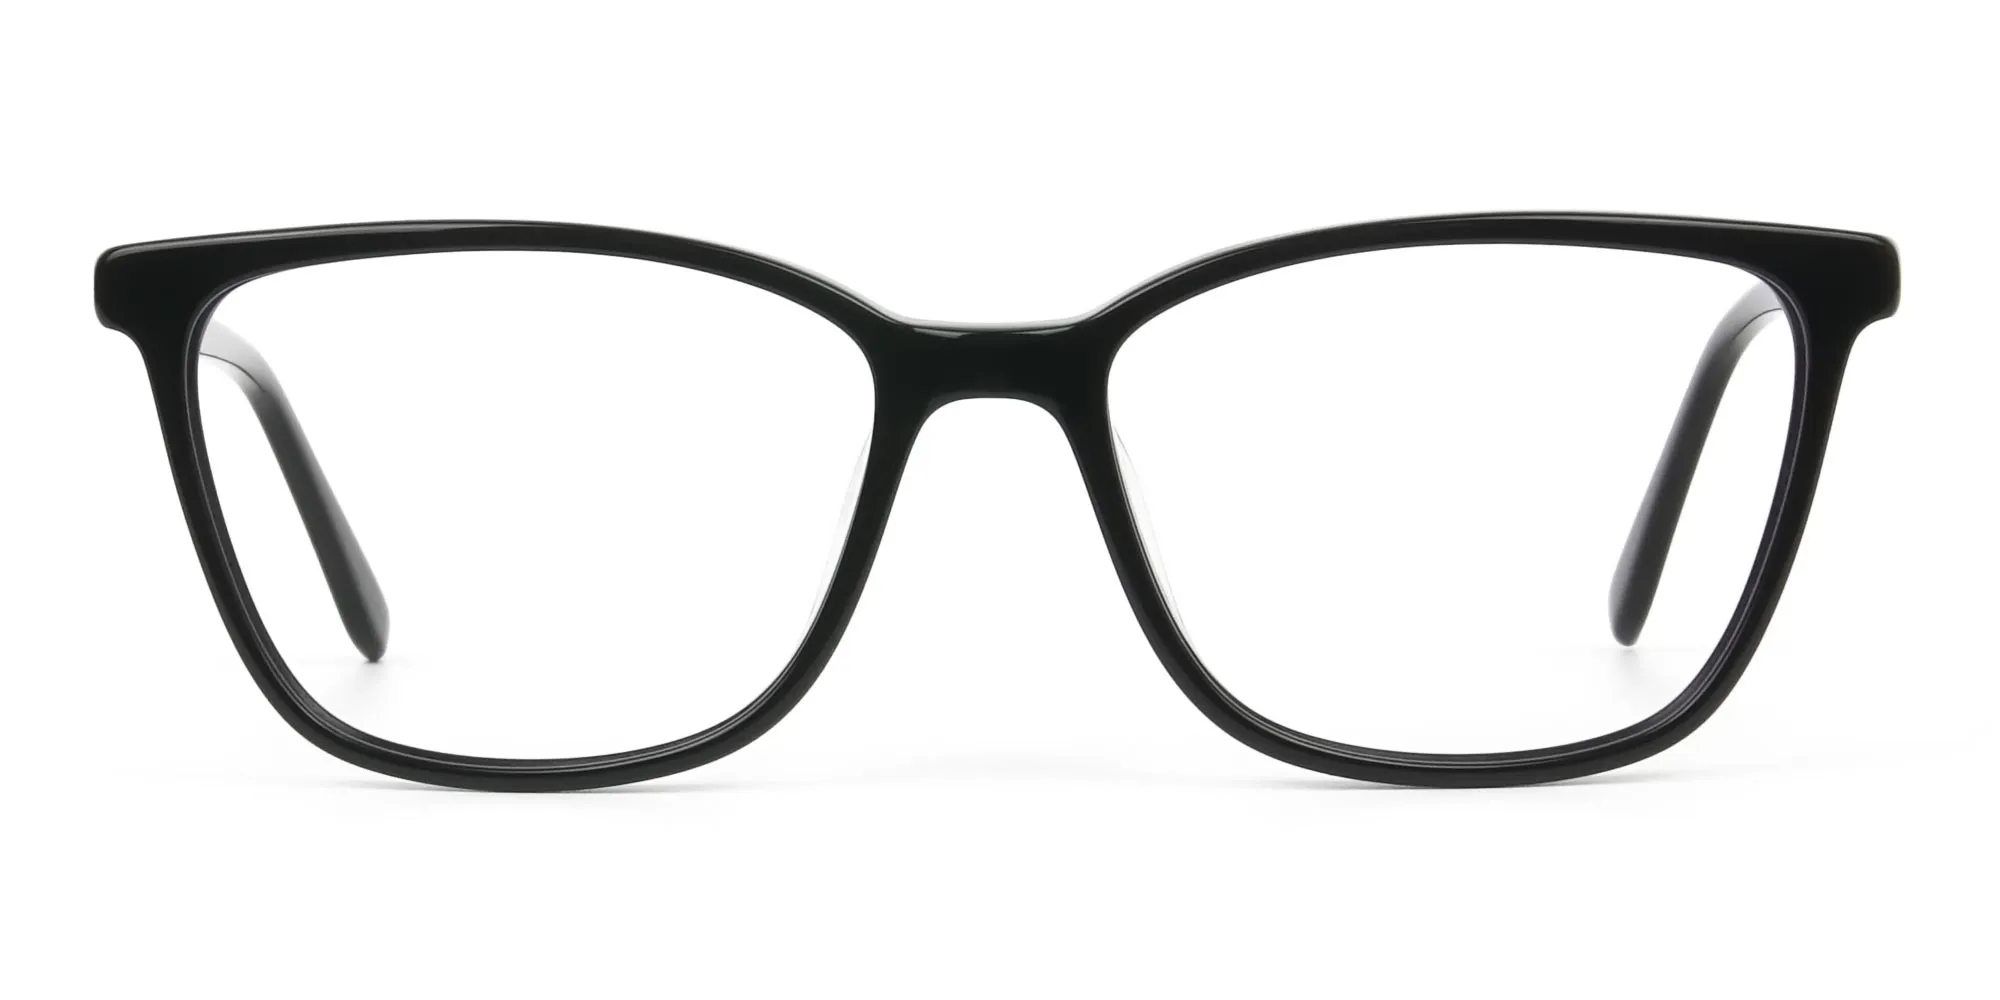 Women Nerd Black Acetate Spectacles in Rectangular - 2